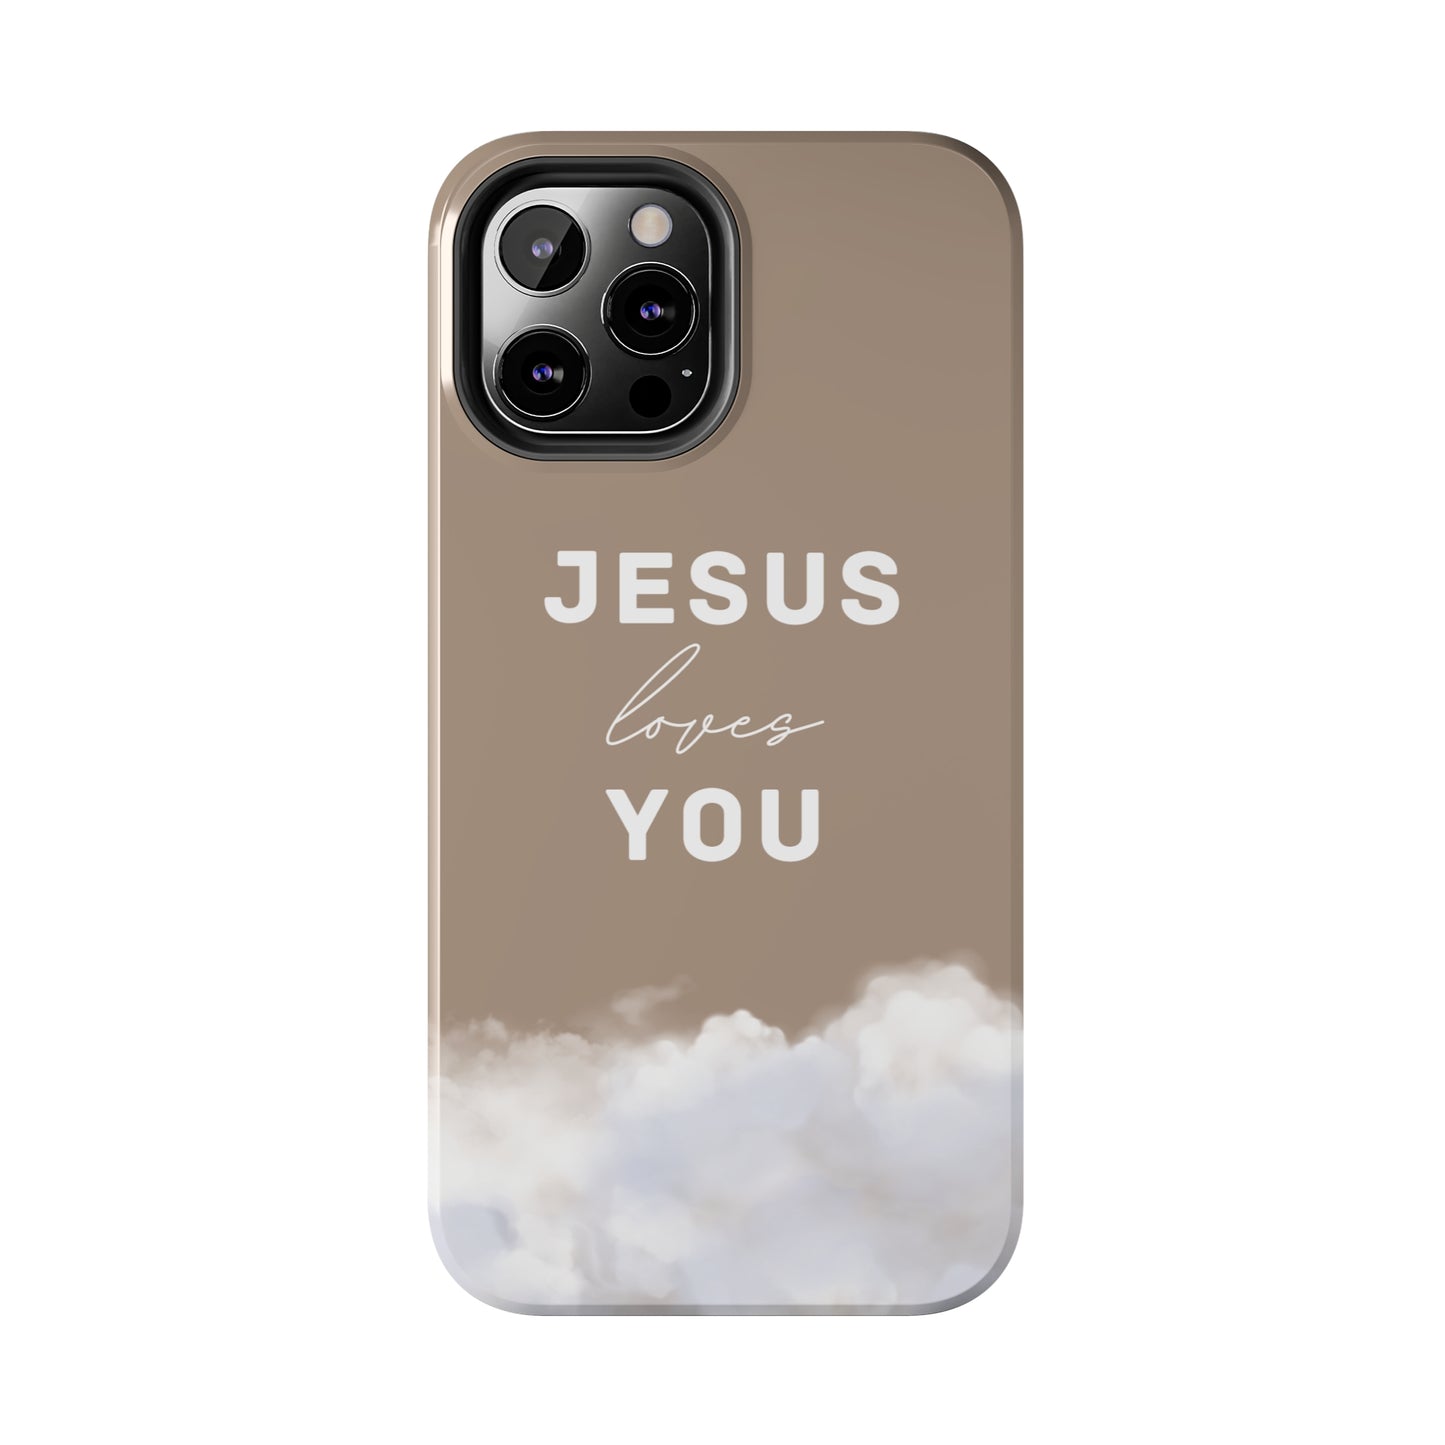 Jesus Love's You iPhone Cases